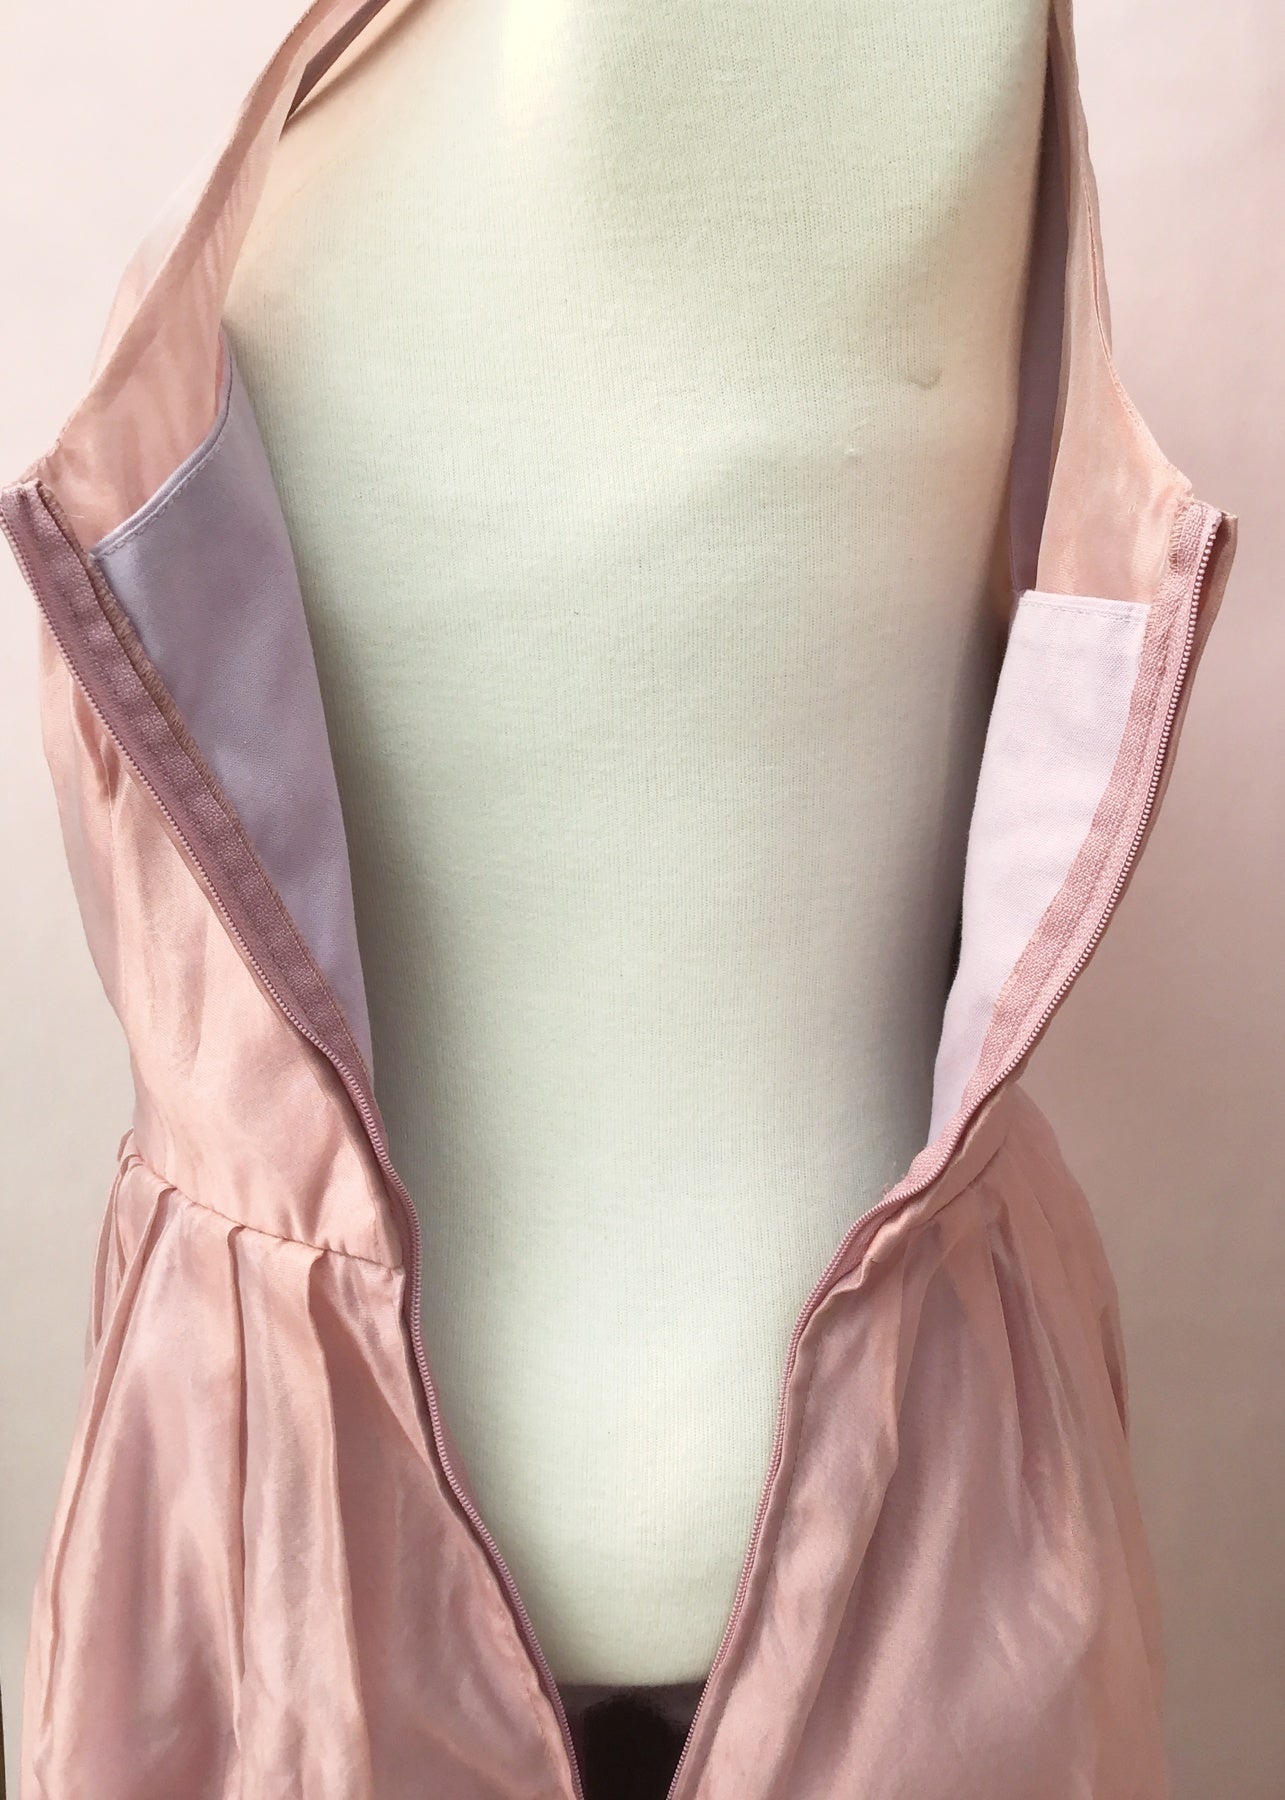 Dusky Pink Laura Ashley Shimmery Party Dress • Sleeveless • Size 16